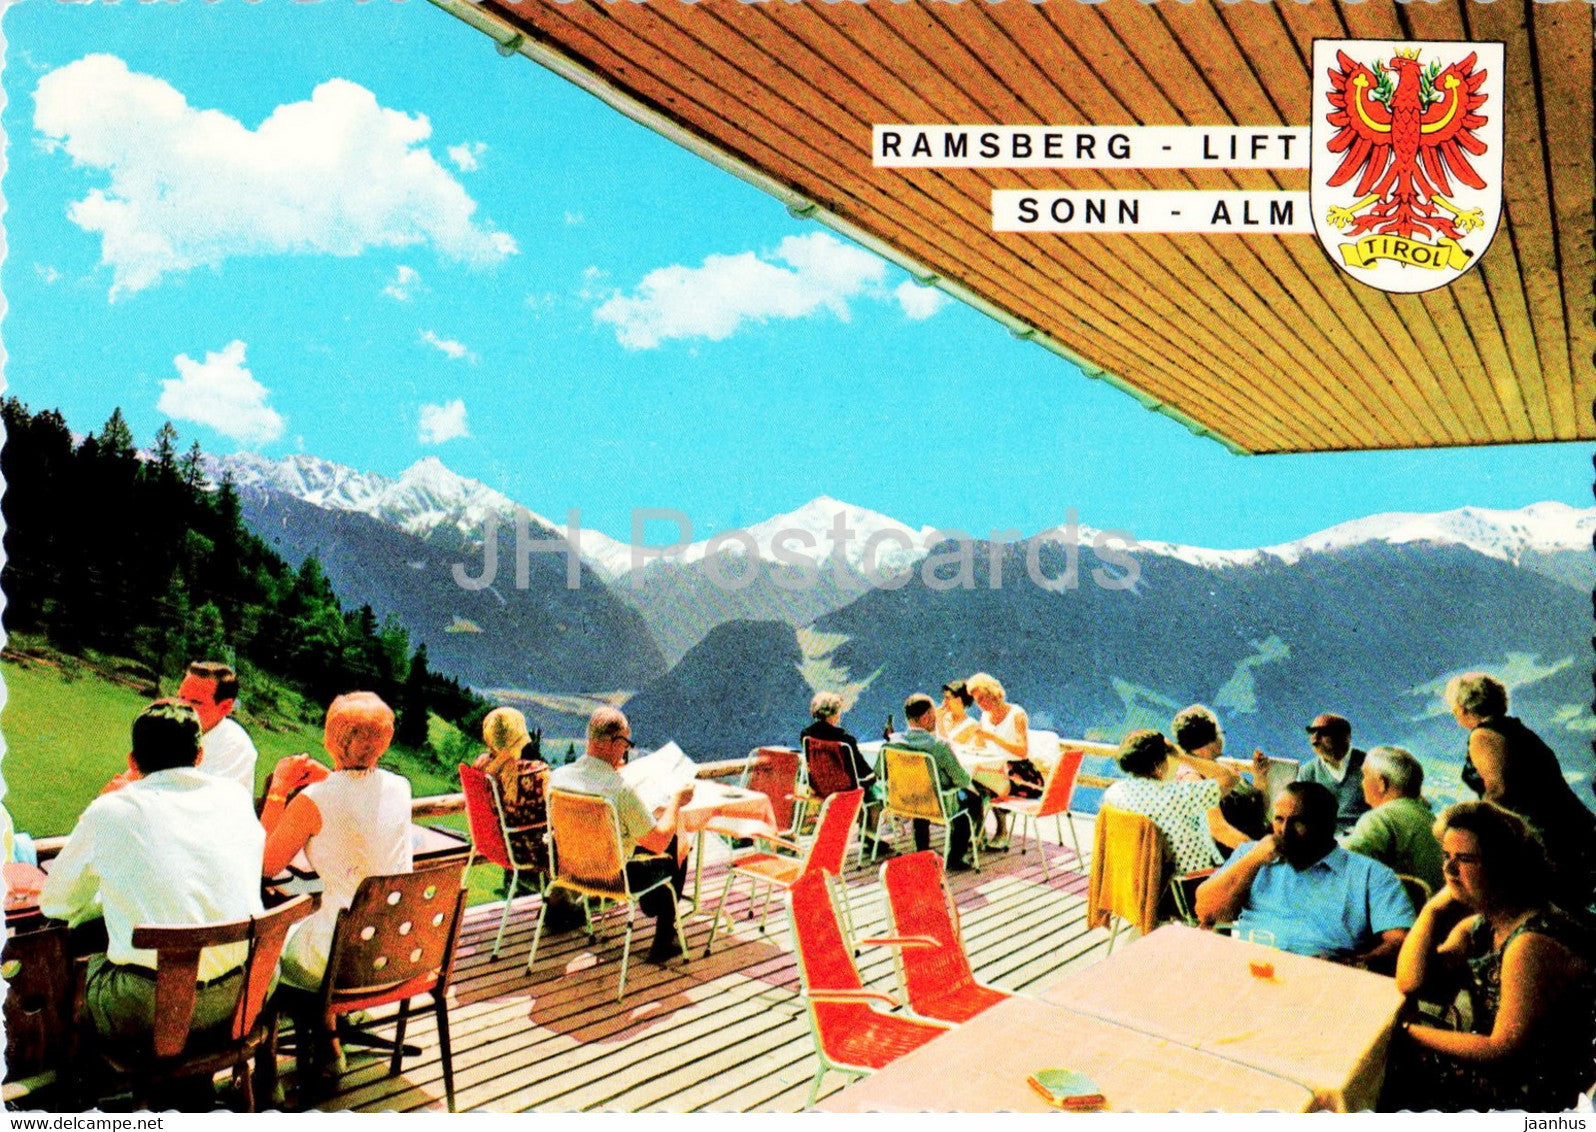 Berg Restaurant Sonnalm 1400 m - am Ramsberg Lift - Zillertal - Austria - unused - JH Postcards